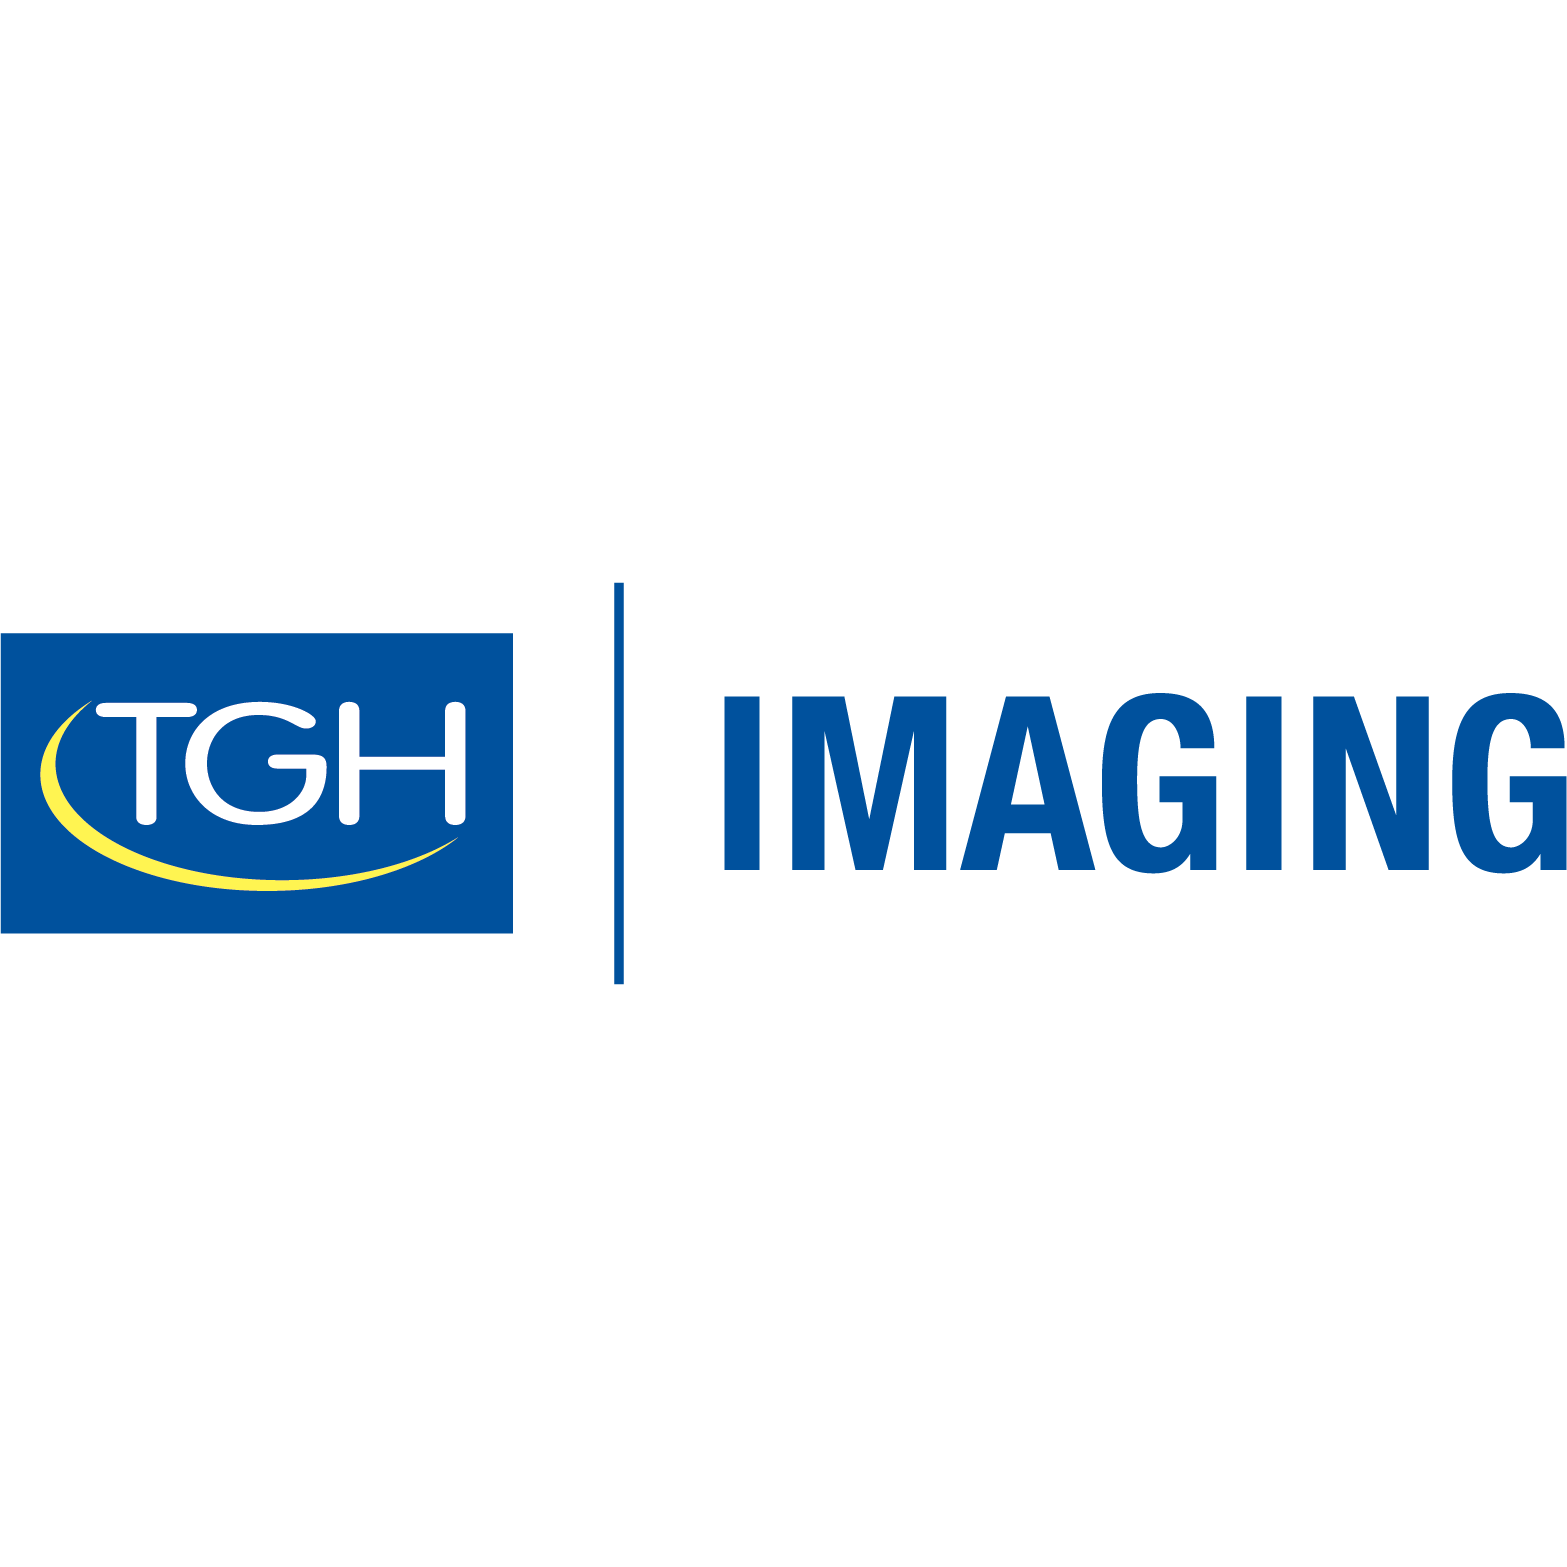 TGH Imaging - Brandon, FL 33511 - (813)874-3177 | ShowMeLocal.com